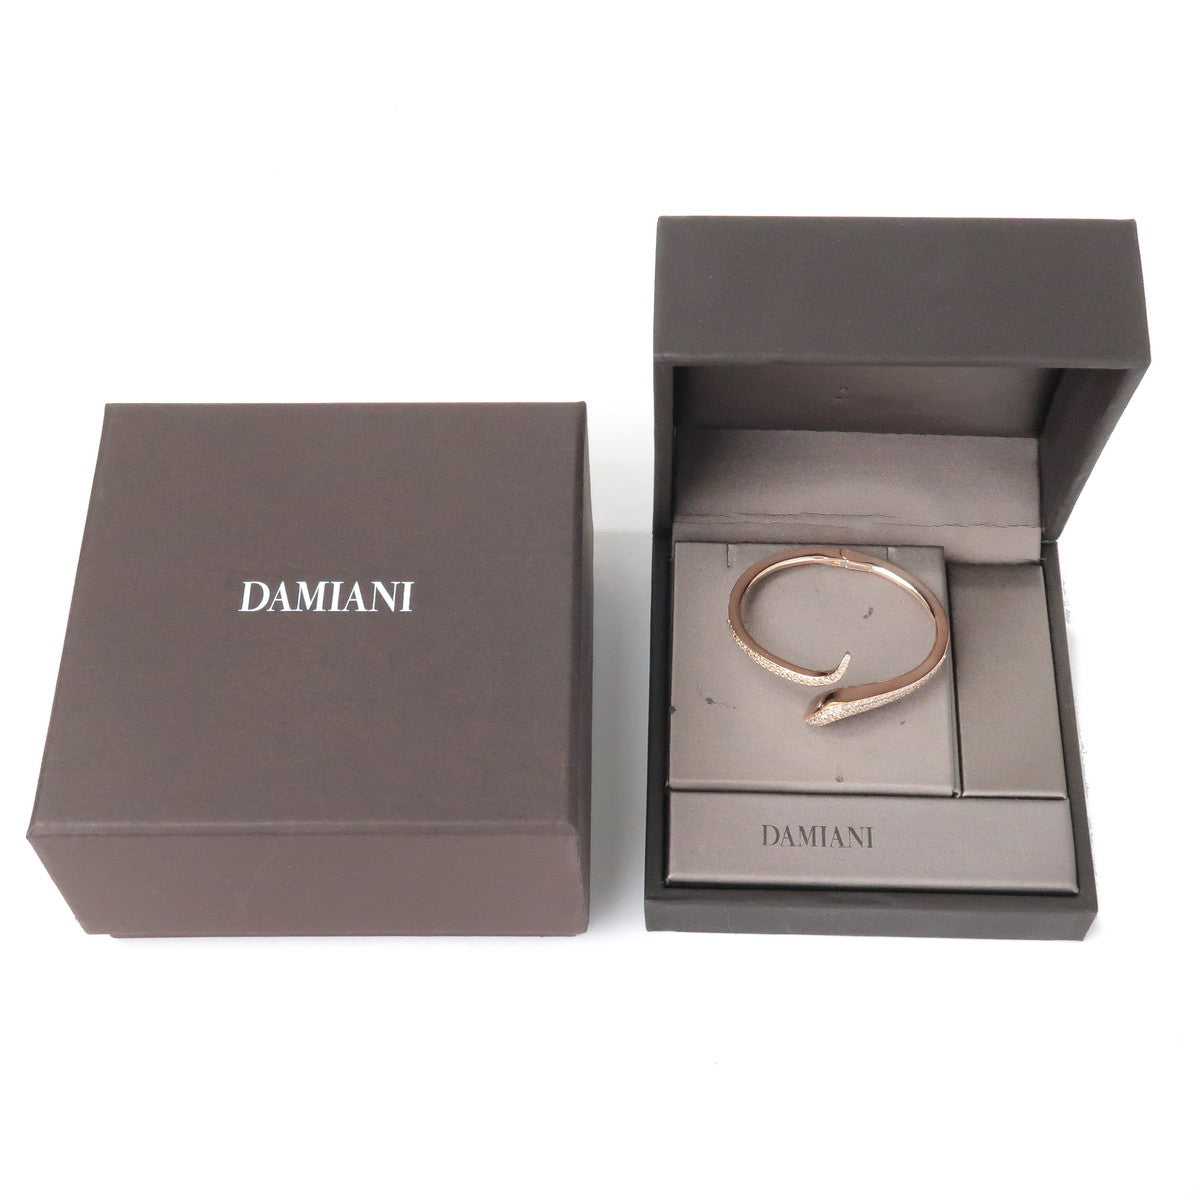 DAMIANI Eden Diamond Bracelet Size M K18PG 750PG Rose Gold